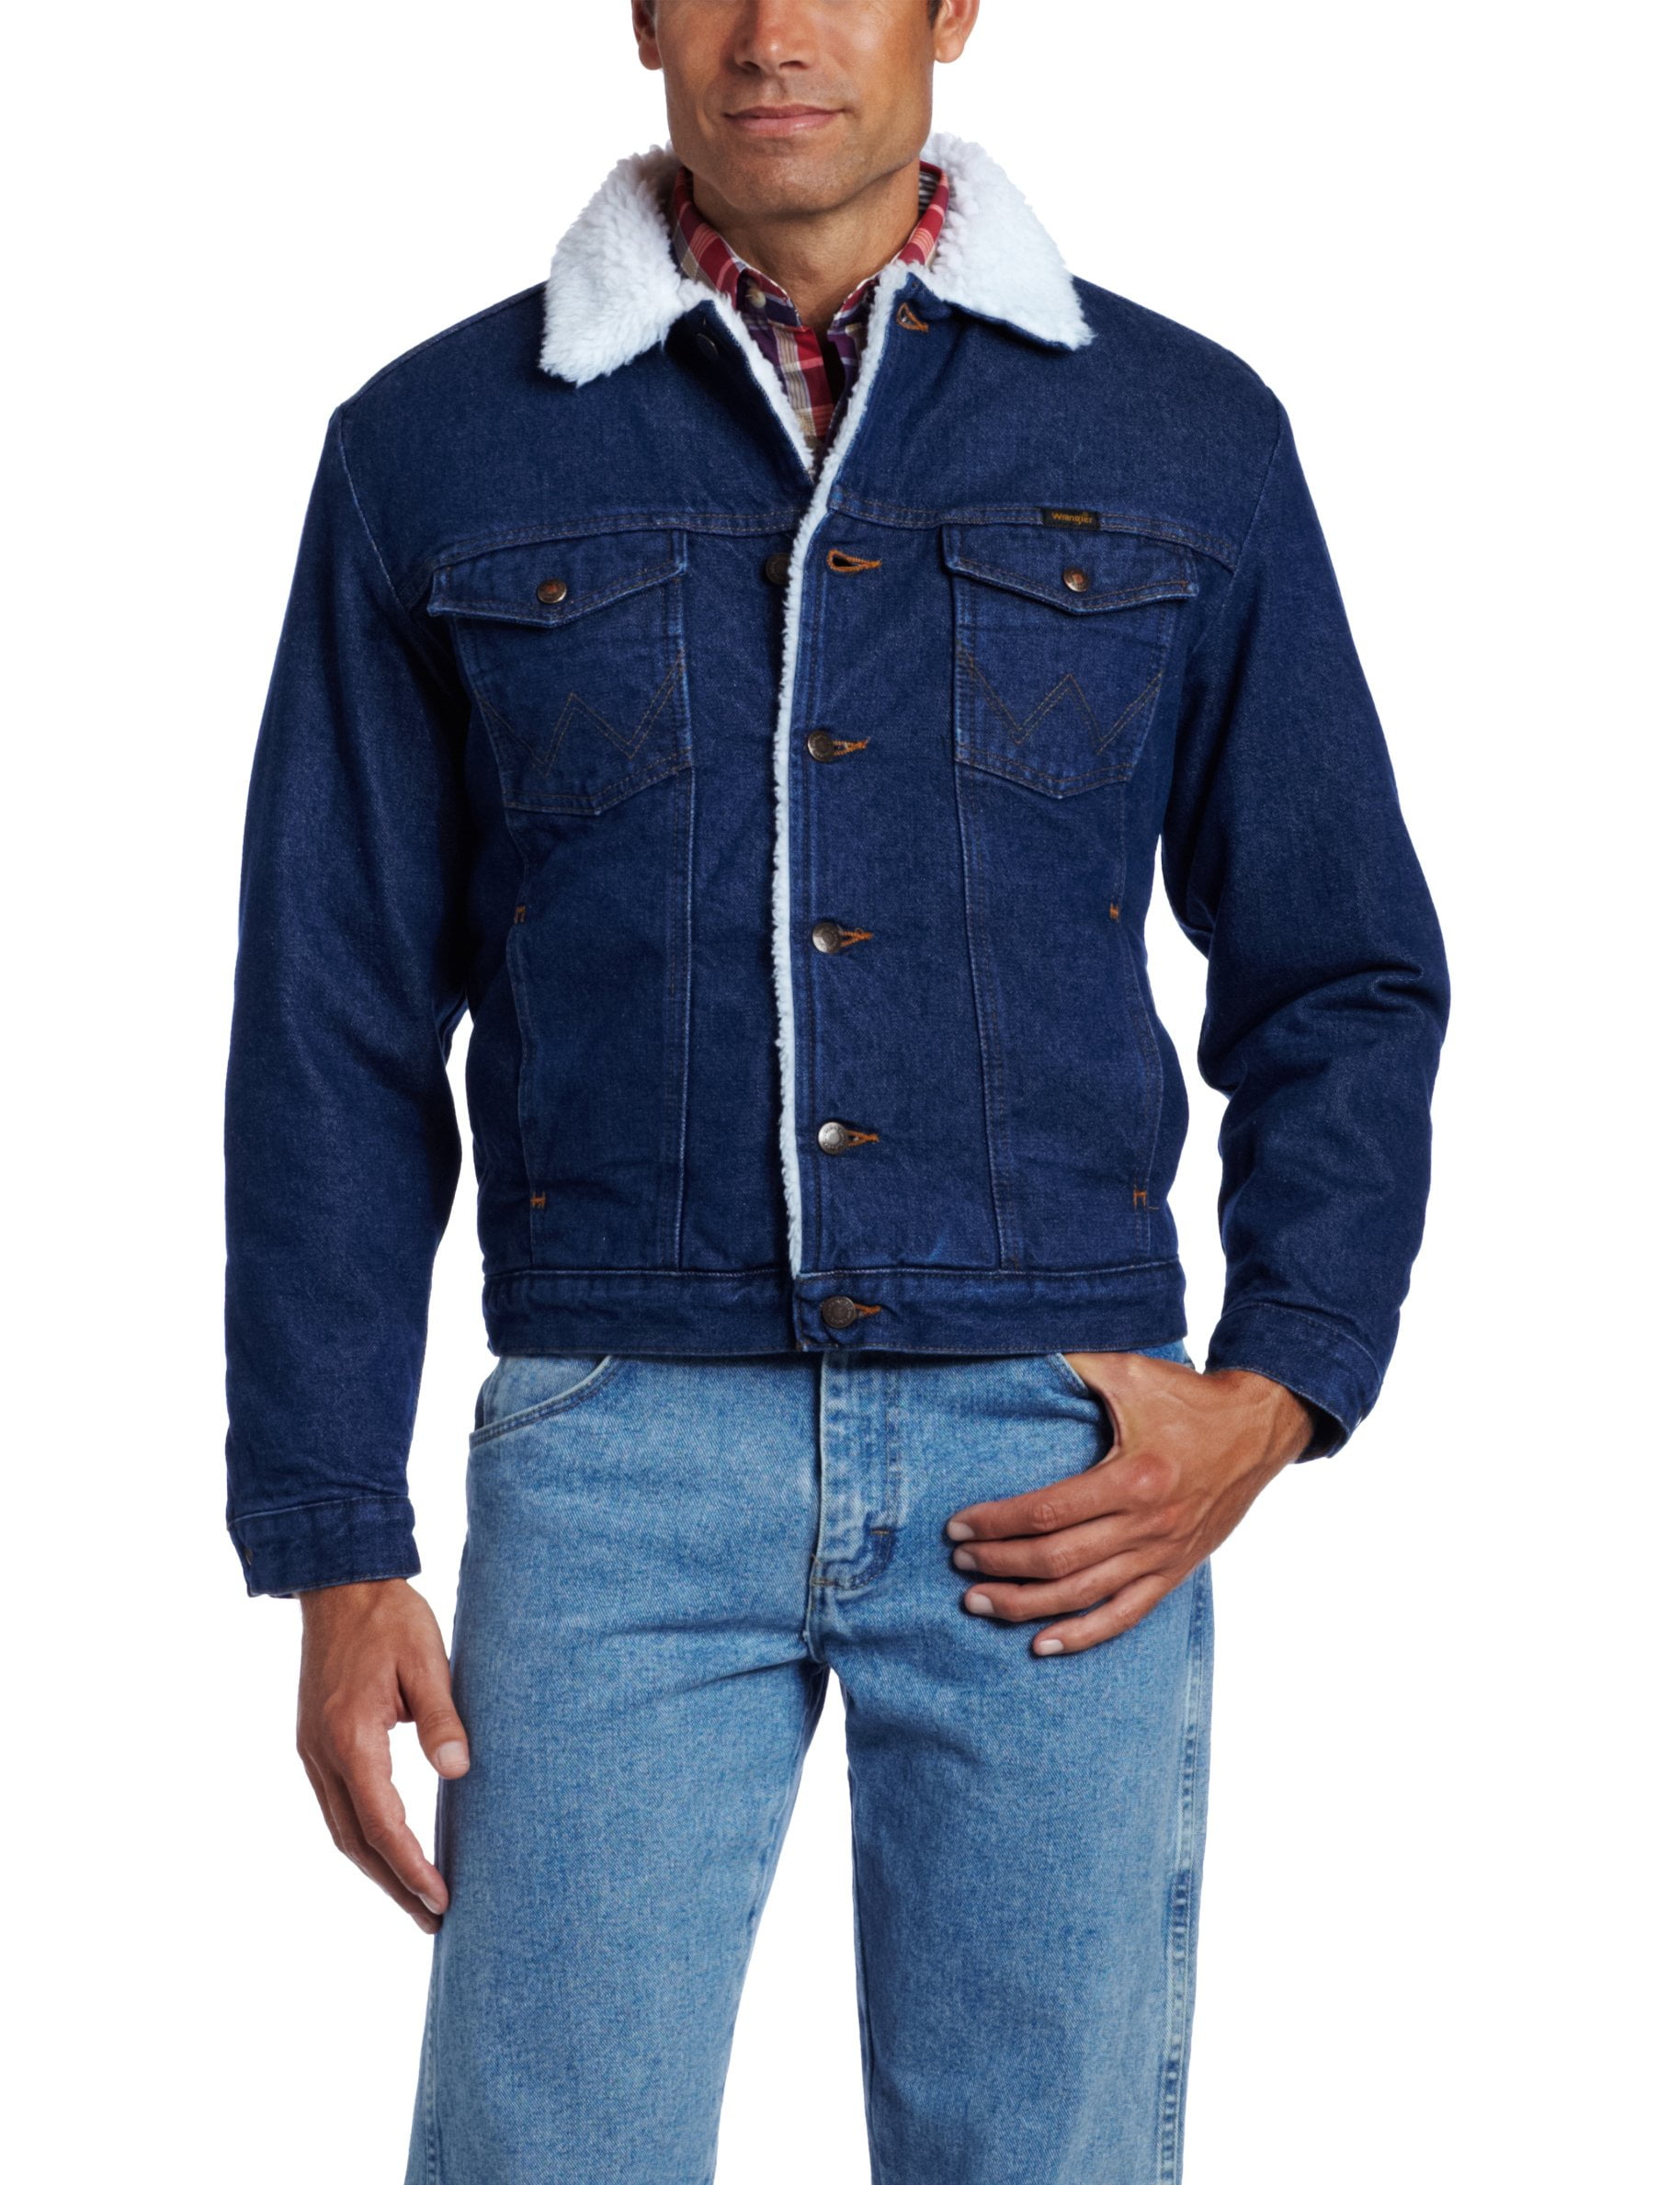 Вранглер мужские купить джинсовые. Wrangler 74255pw Western Style lined Denim Jacket. Куртка Wrangler Western Denim Jacket. Wrangler шерпа мужская. Джинсовая куртка мужская Wrangler 74255pw.